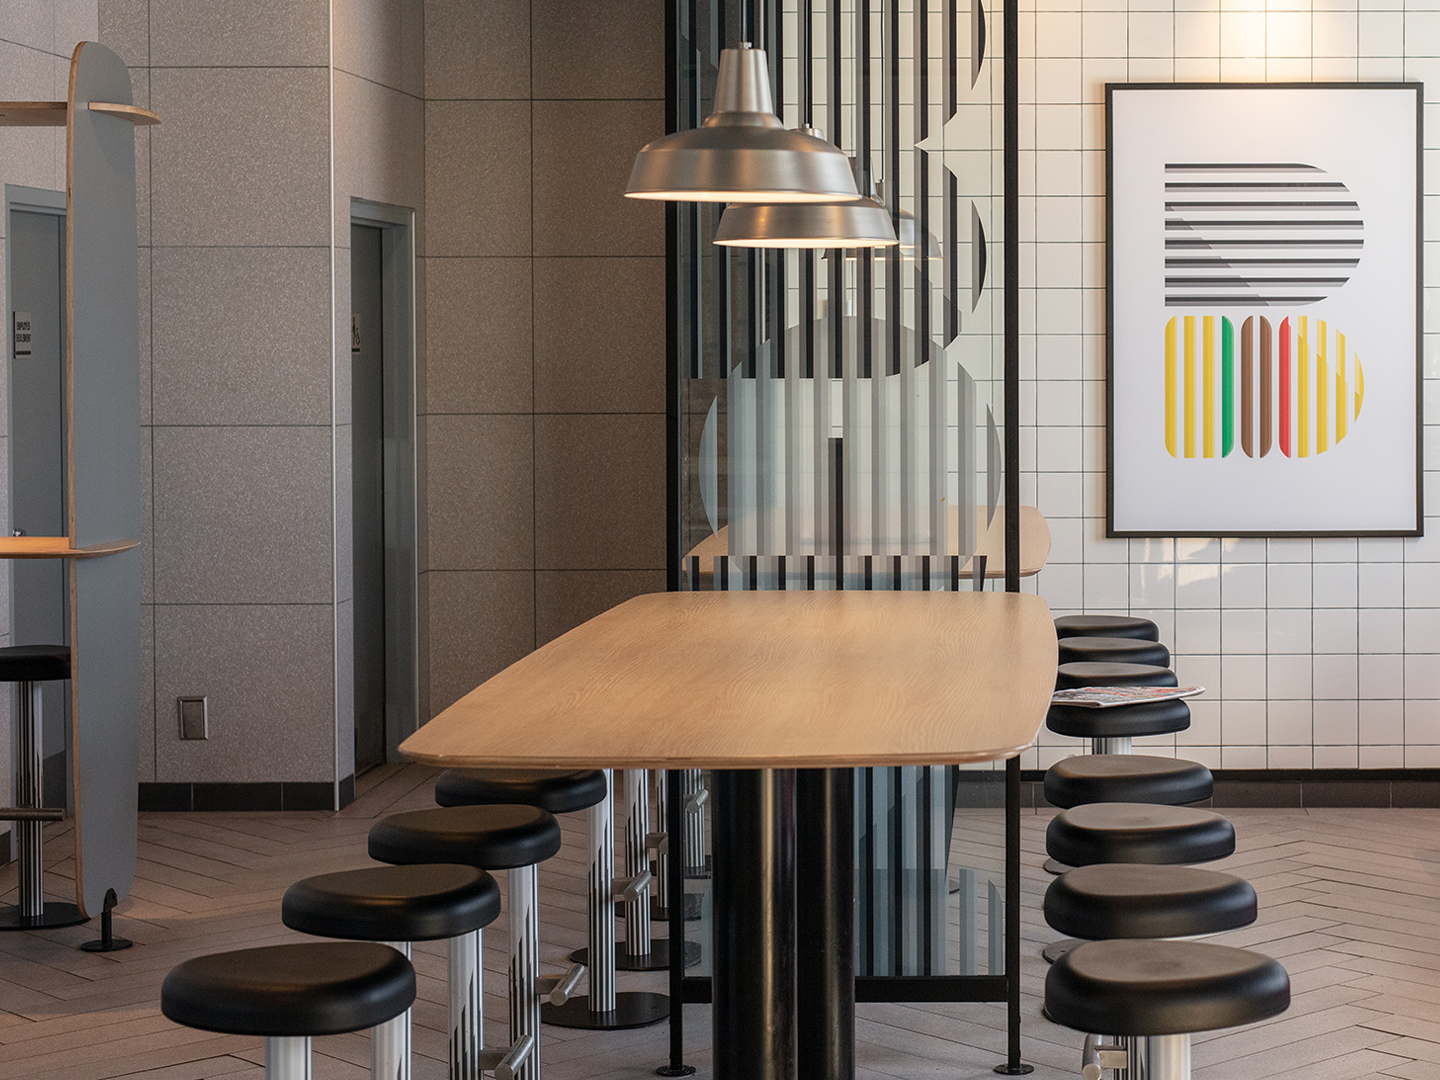 McDonald's Geometry - Custom Restaurant Design - Custom Fixtures and Furniture